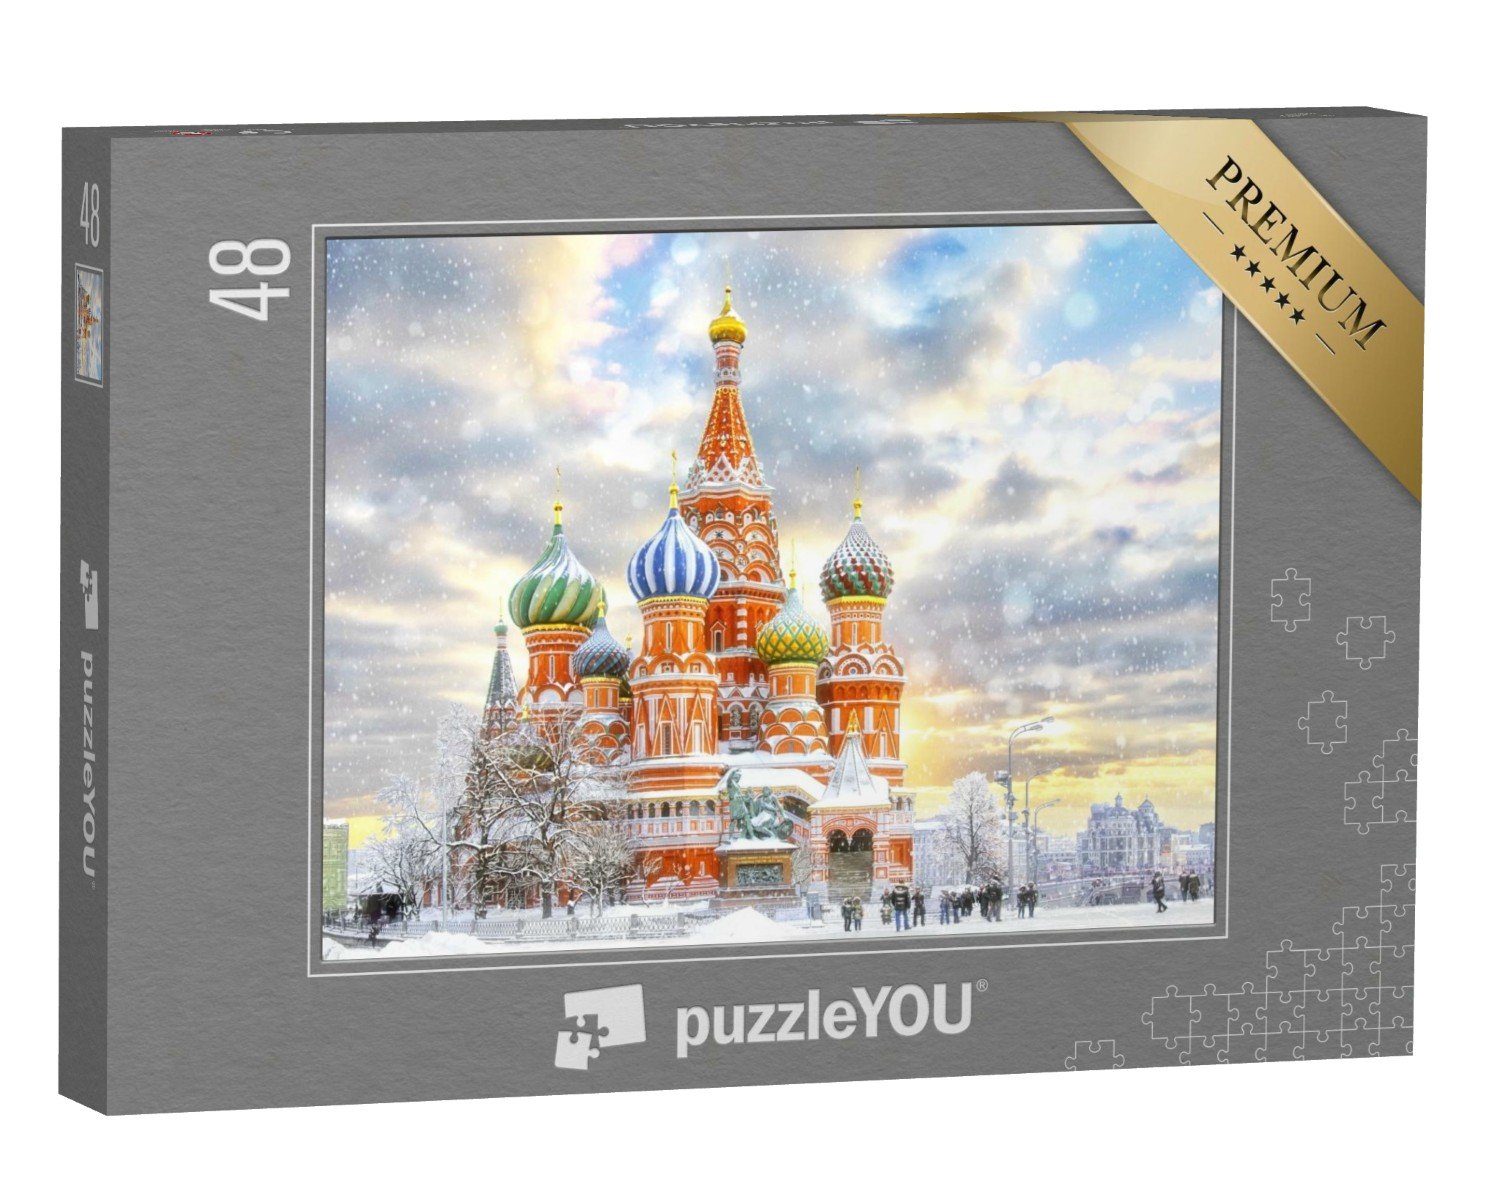 Puzzle Roter mit Puzzleteile, 48 Basilius-Kathedrale, puzzleYOU-Kollektionen Platz Moskau puzzleYOU Russland,